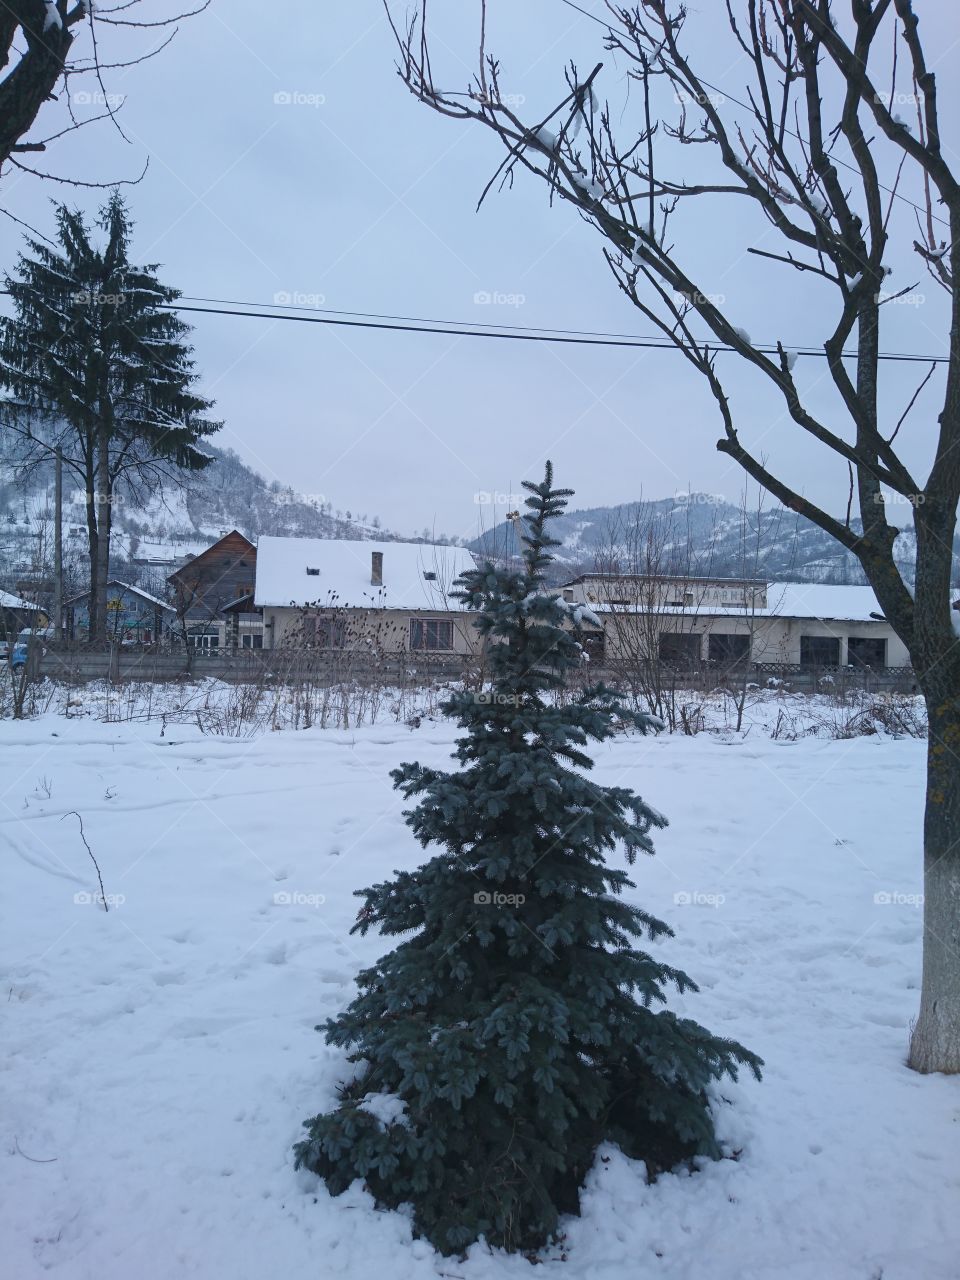 village in the mountains in winter season